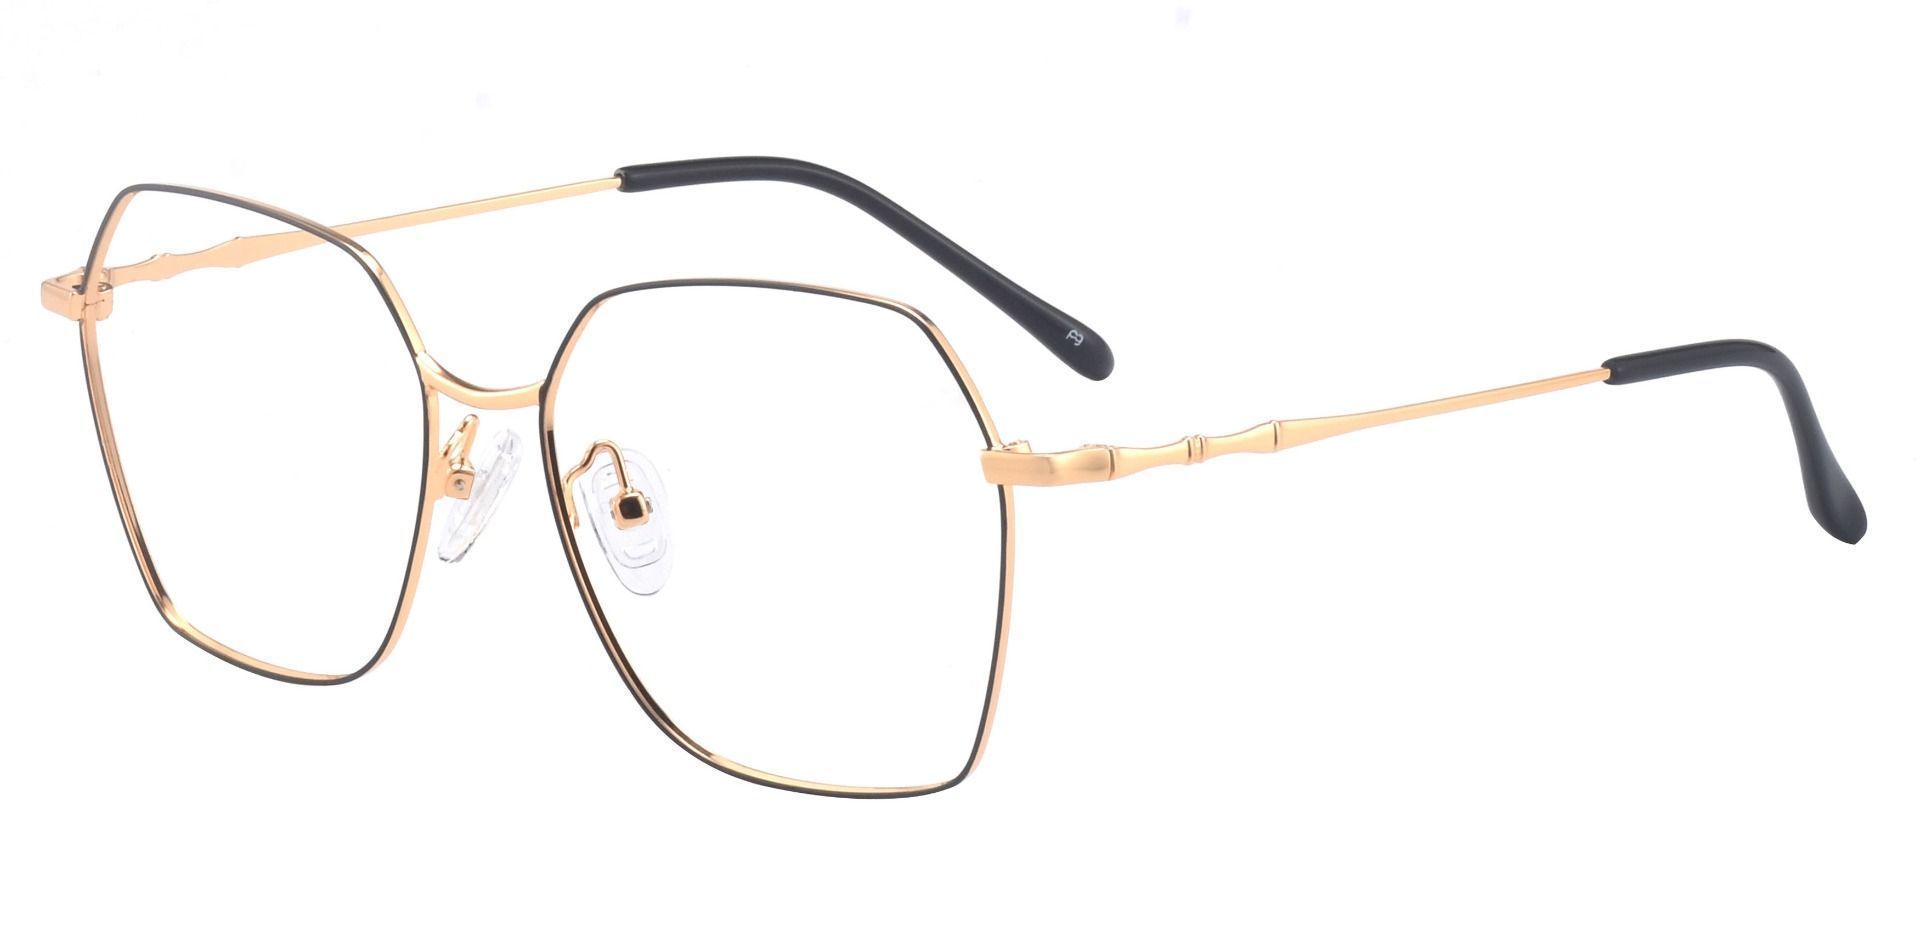 Ahmad Geometric Prescription Glasses - Gold | Women's Eyeglasses ...